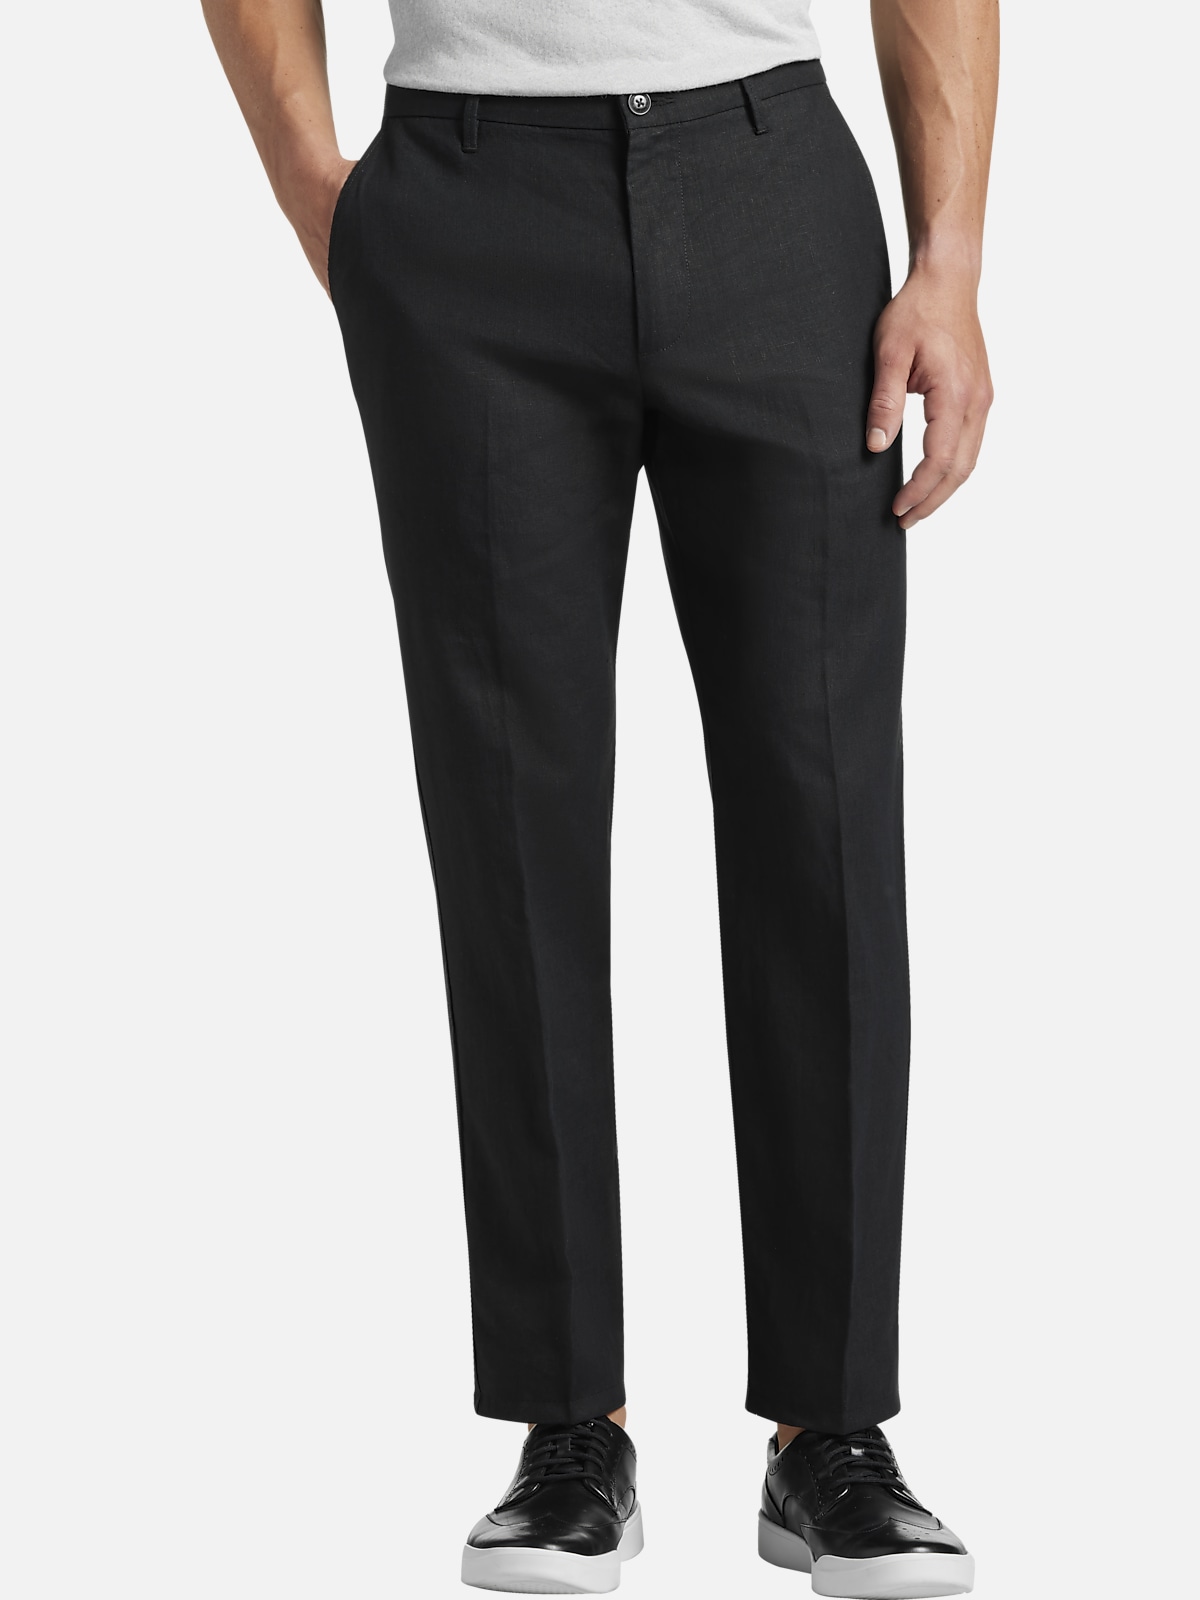 Joseph Abboud Modern Fit Linen Pants | All Sale| Men's Wearhouse